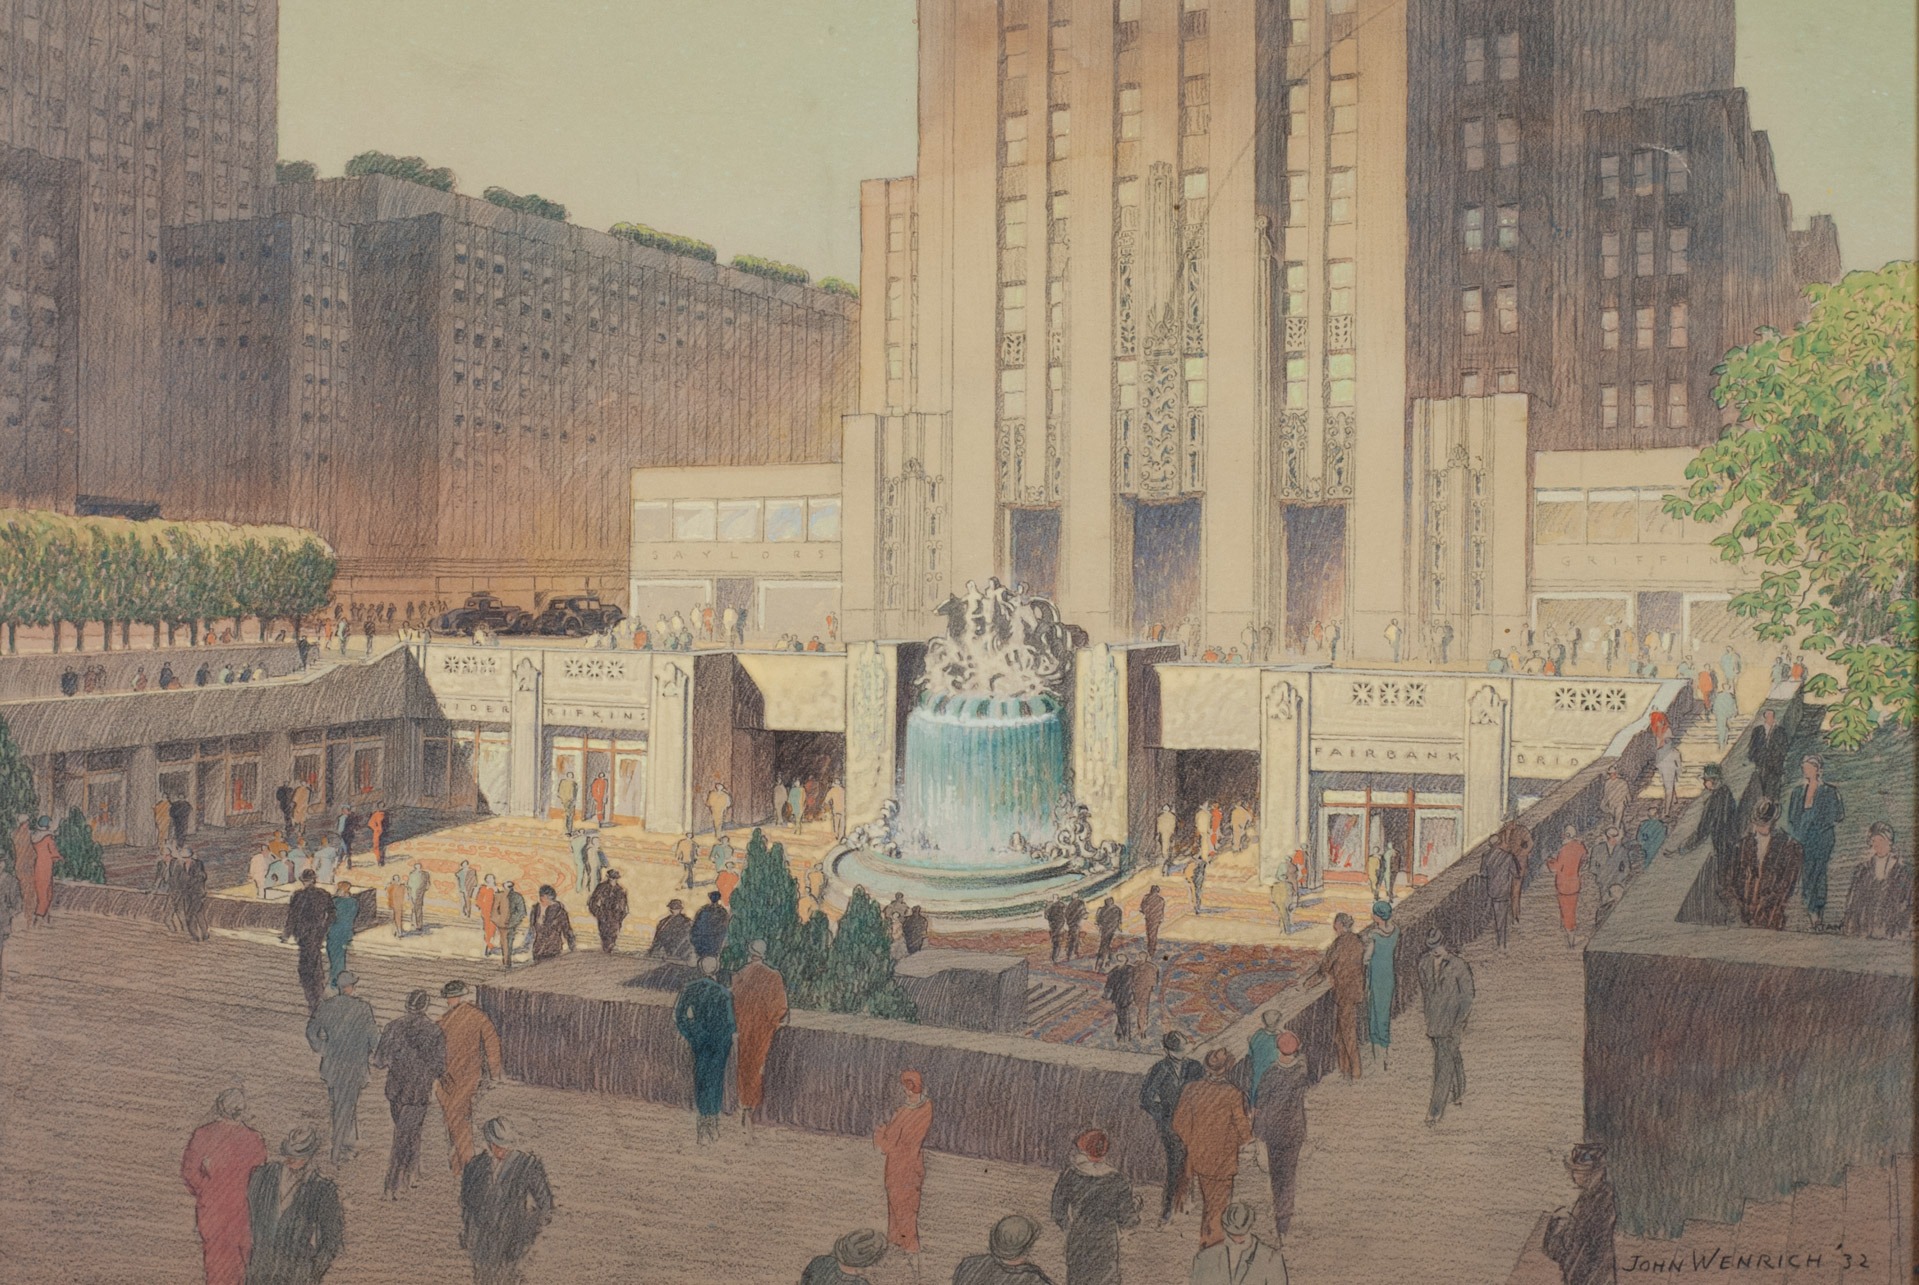 Illustration of Rockefeller Center Plaza by John Wenrich, 1932